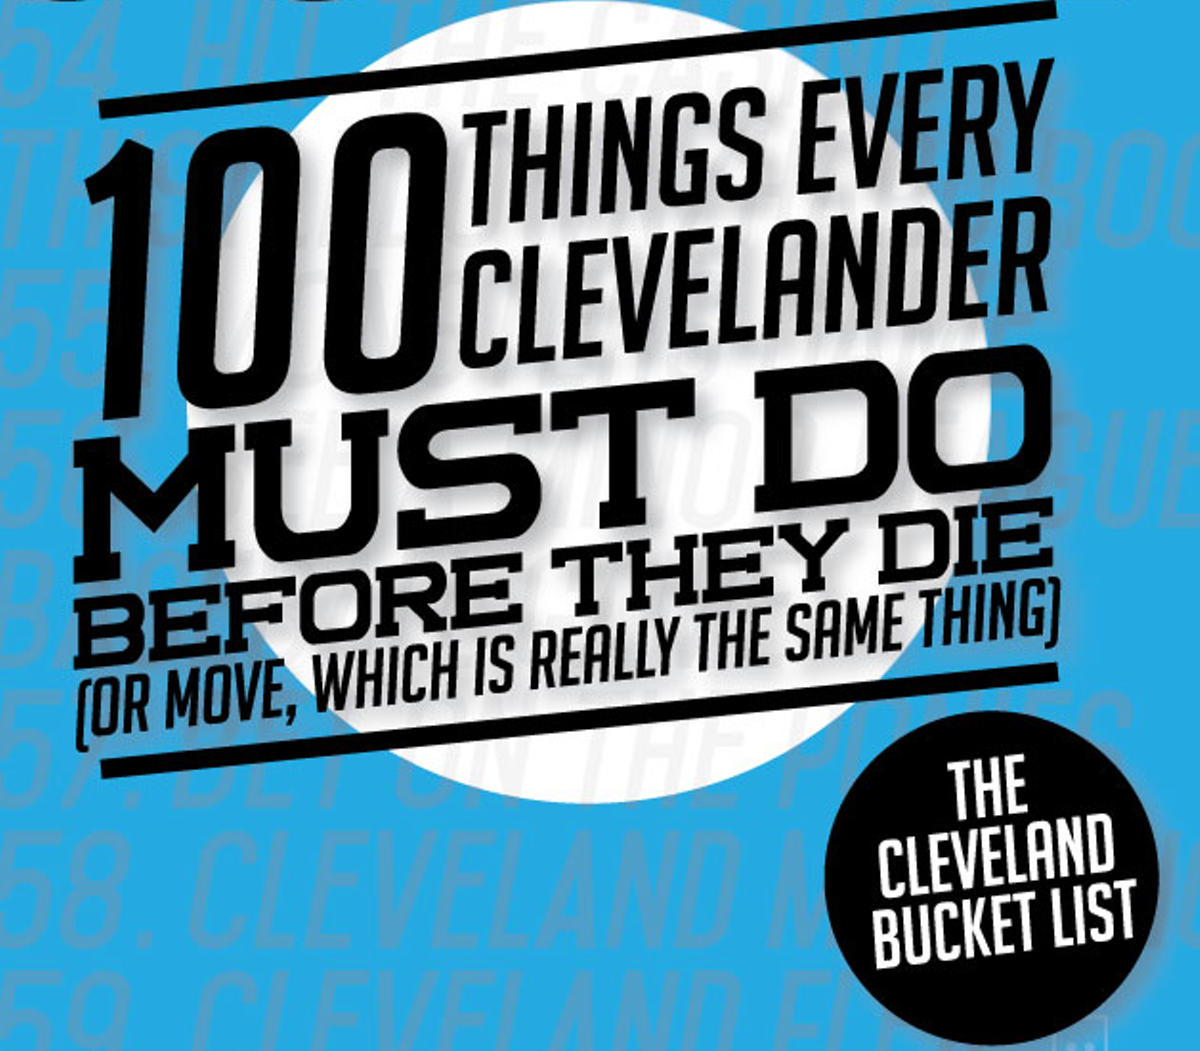 The Cleveland Bucket List